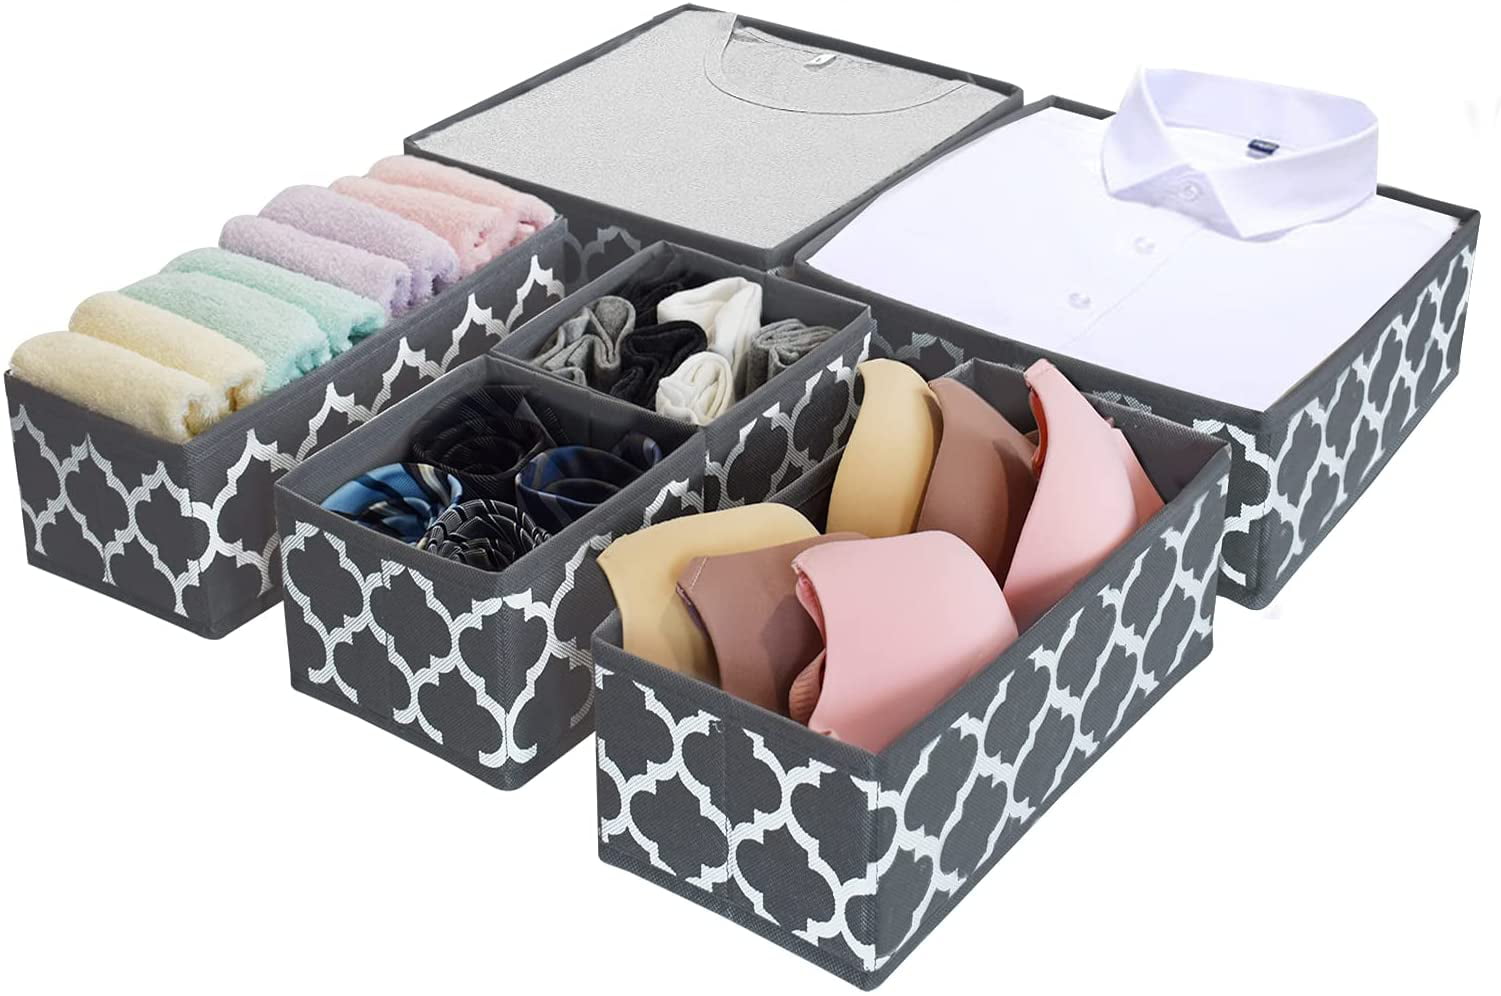 Underwear Organizer Drawer Divider Foldable Closet Dresser Storage Box Baskets Bins Containers for Bras Socks Lingerie Baby Clothing Grey Lantern Printing Set of 12